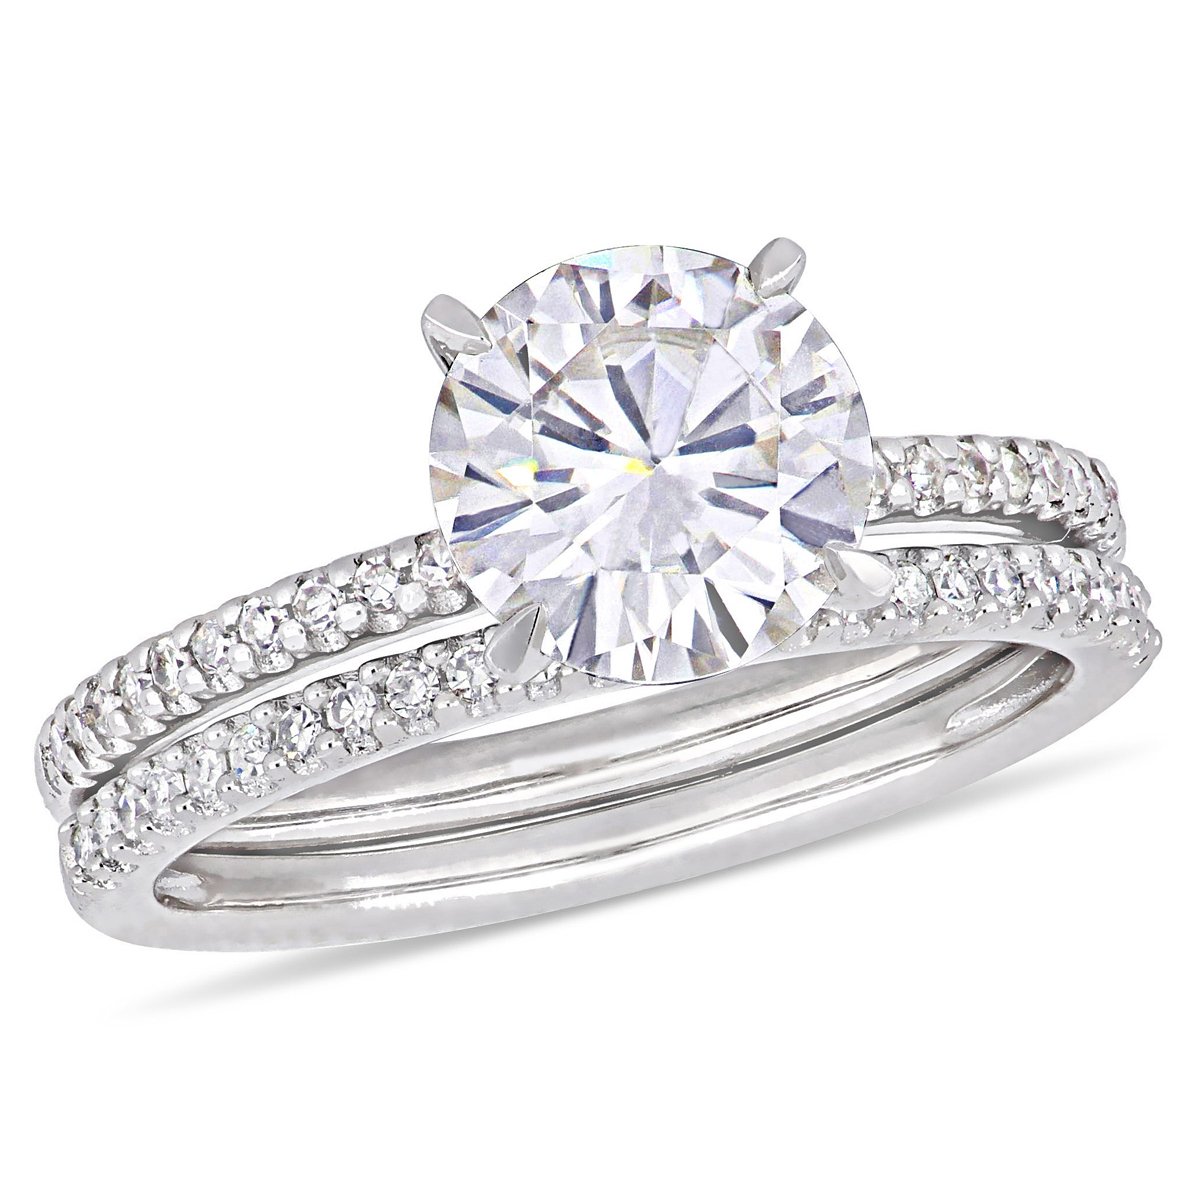 Gem And Harmony 1.85 Carat (ctw) Lab-Created Moissanite Engagement Bridal Wedding Ring Set 14K White Gold with Diamonds 1/4 Carat (ctw)